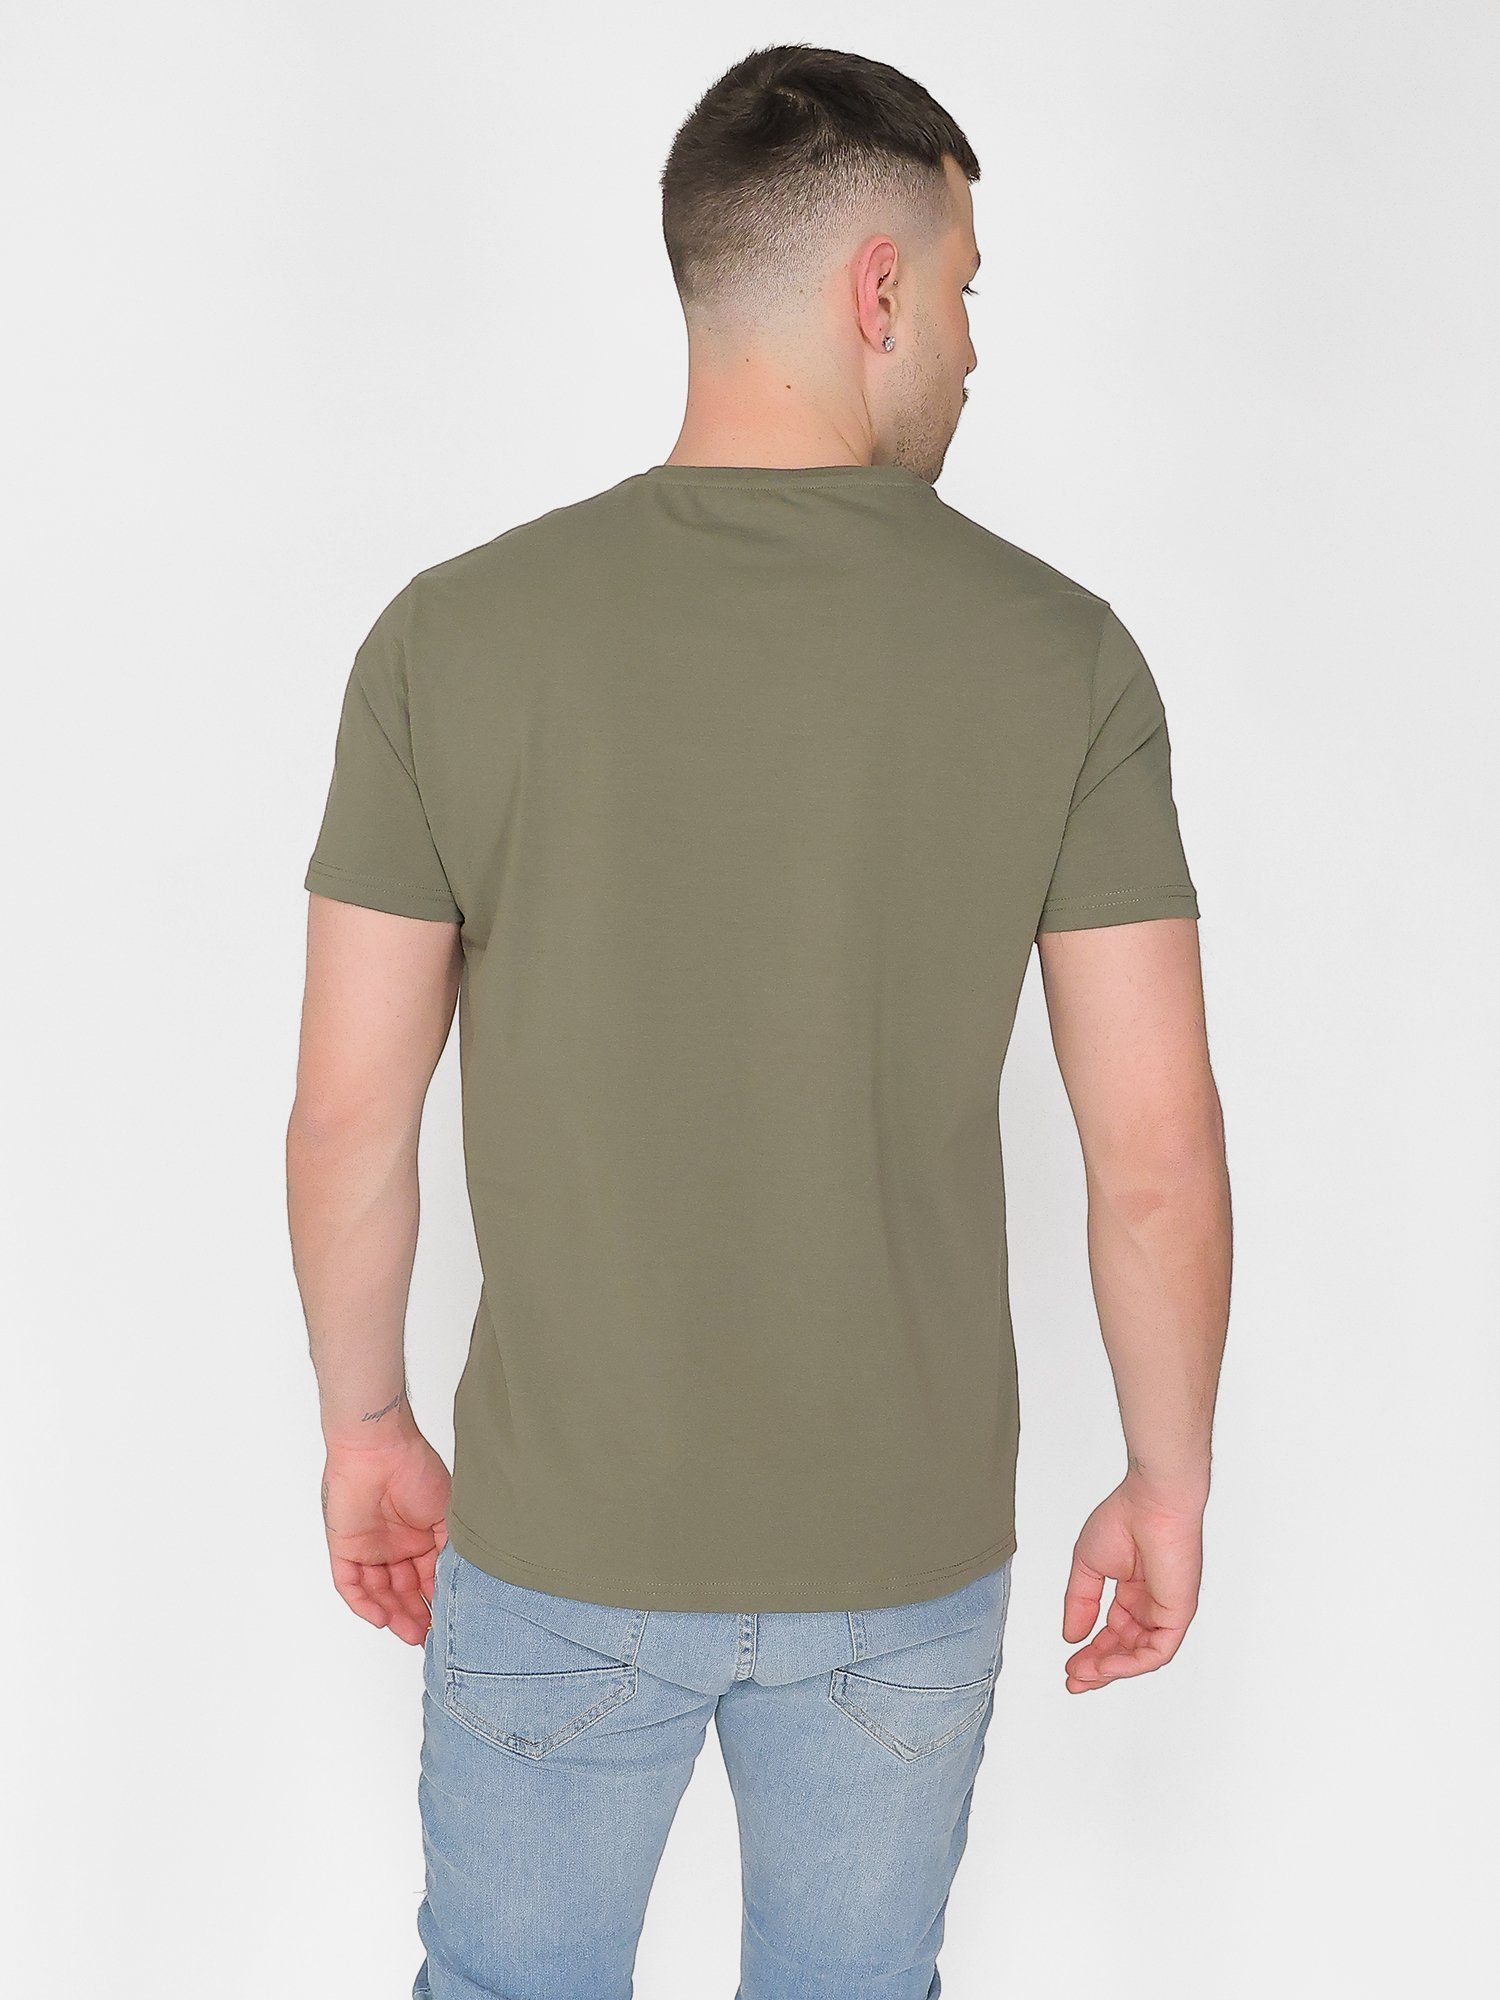 TOP GUN T-Shirt olive TG20213038